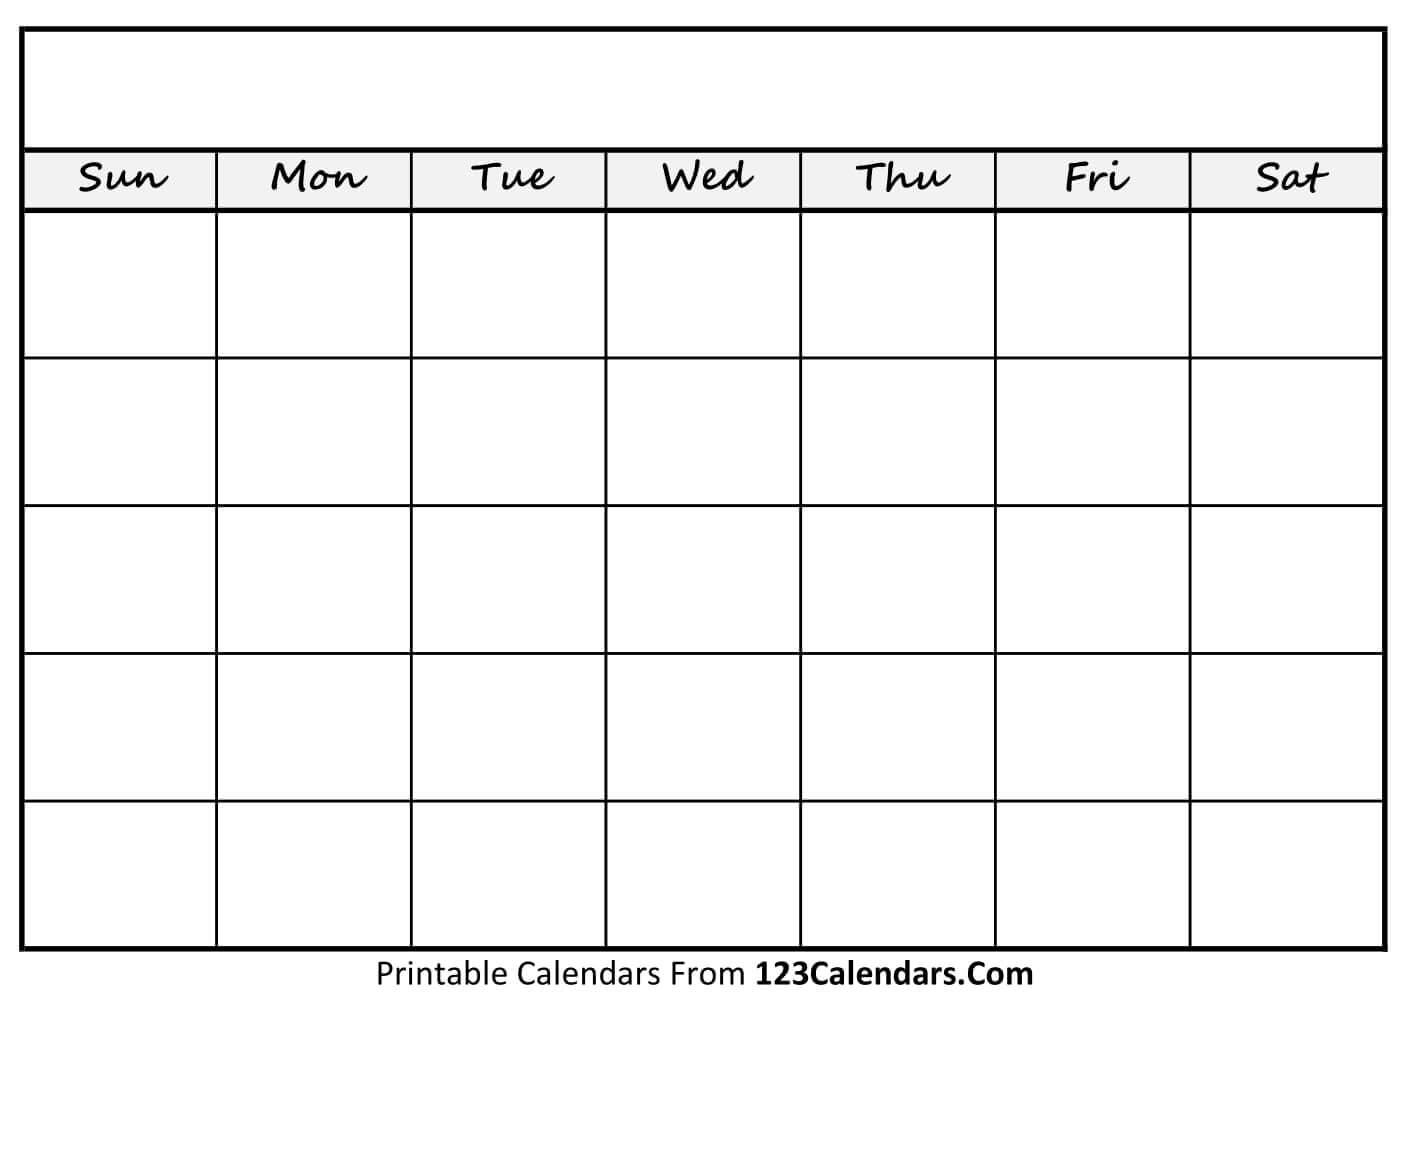 Printable Blank Calendar Templates - 123Calendars throughout Printable Calendar Template With Lines